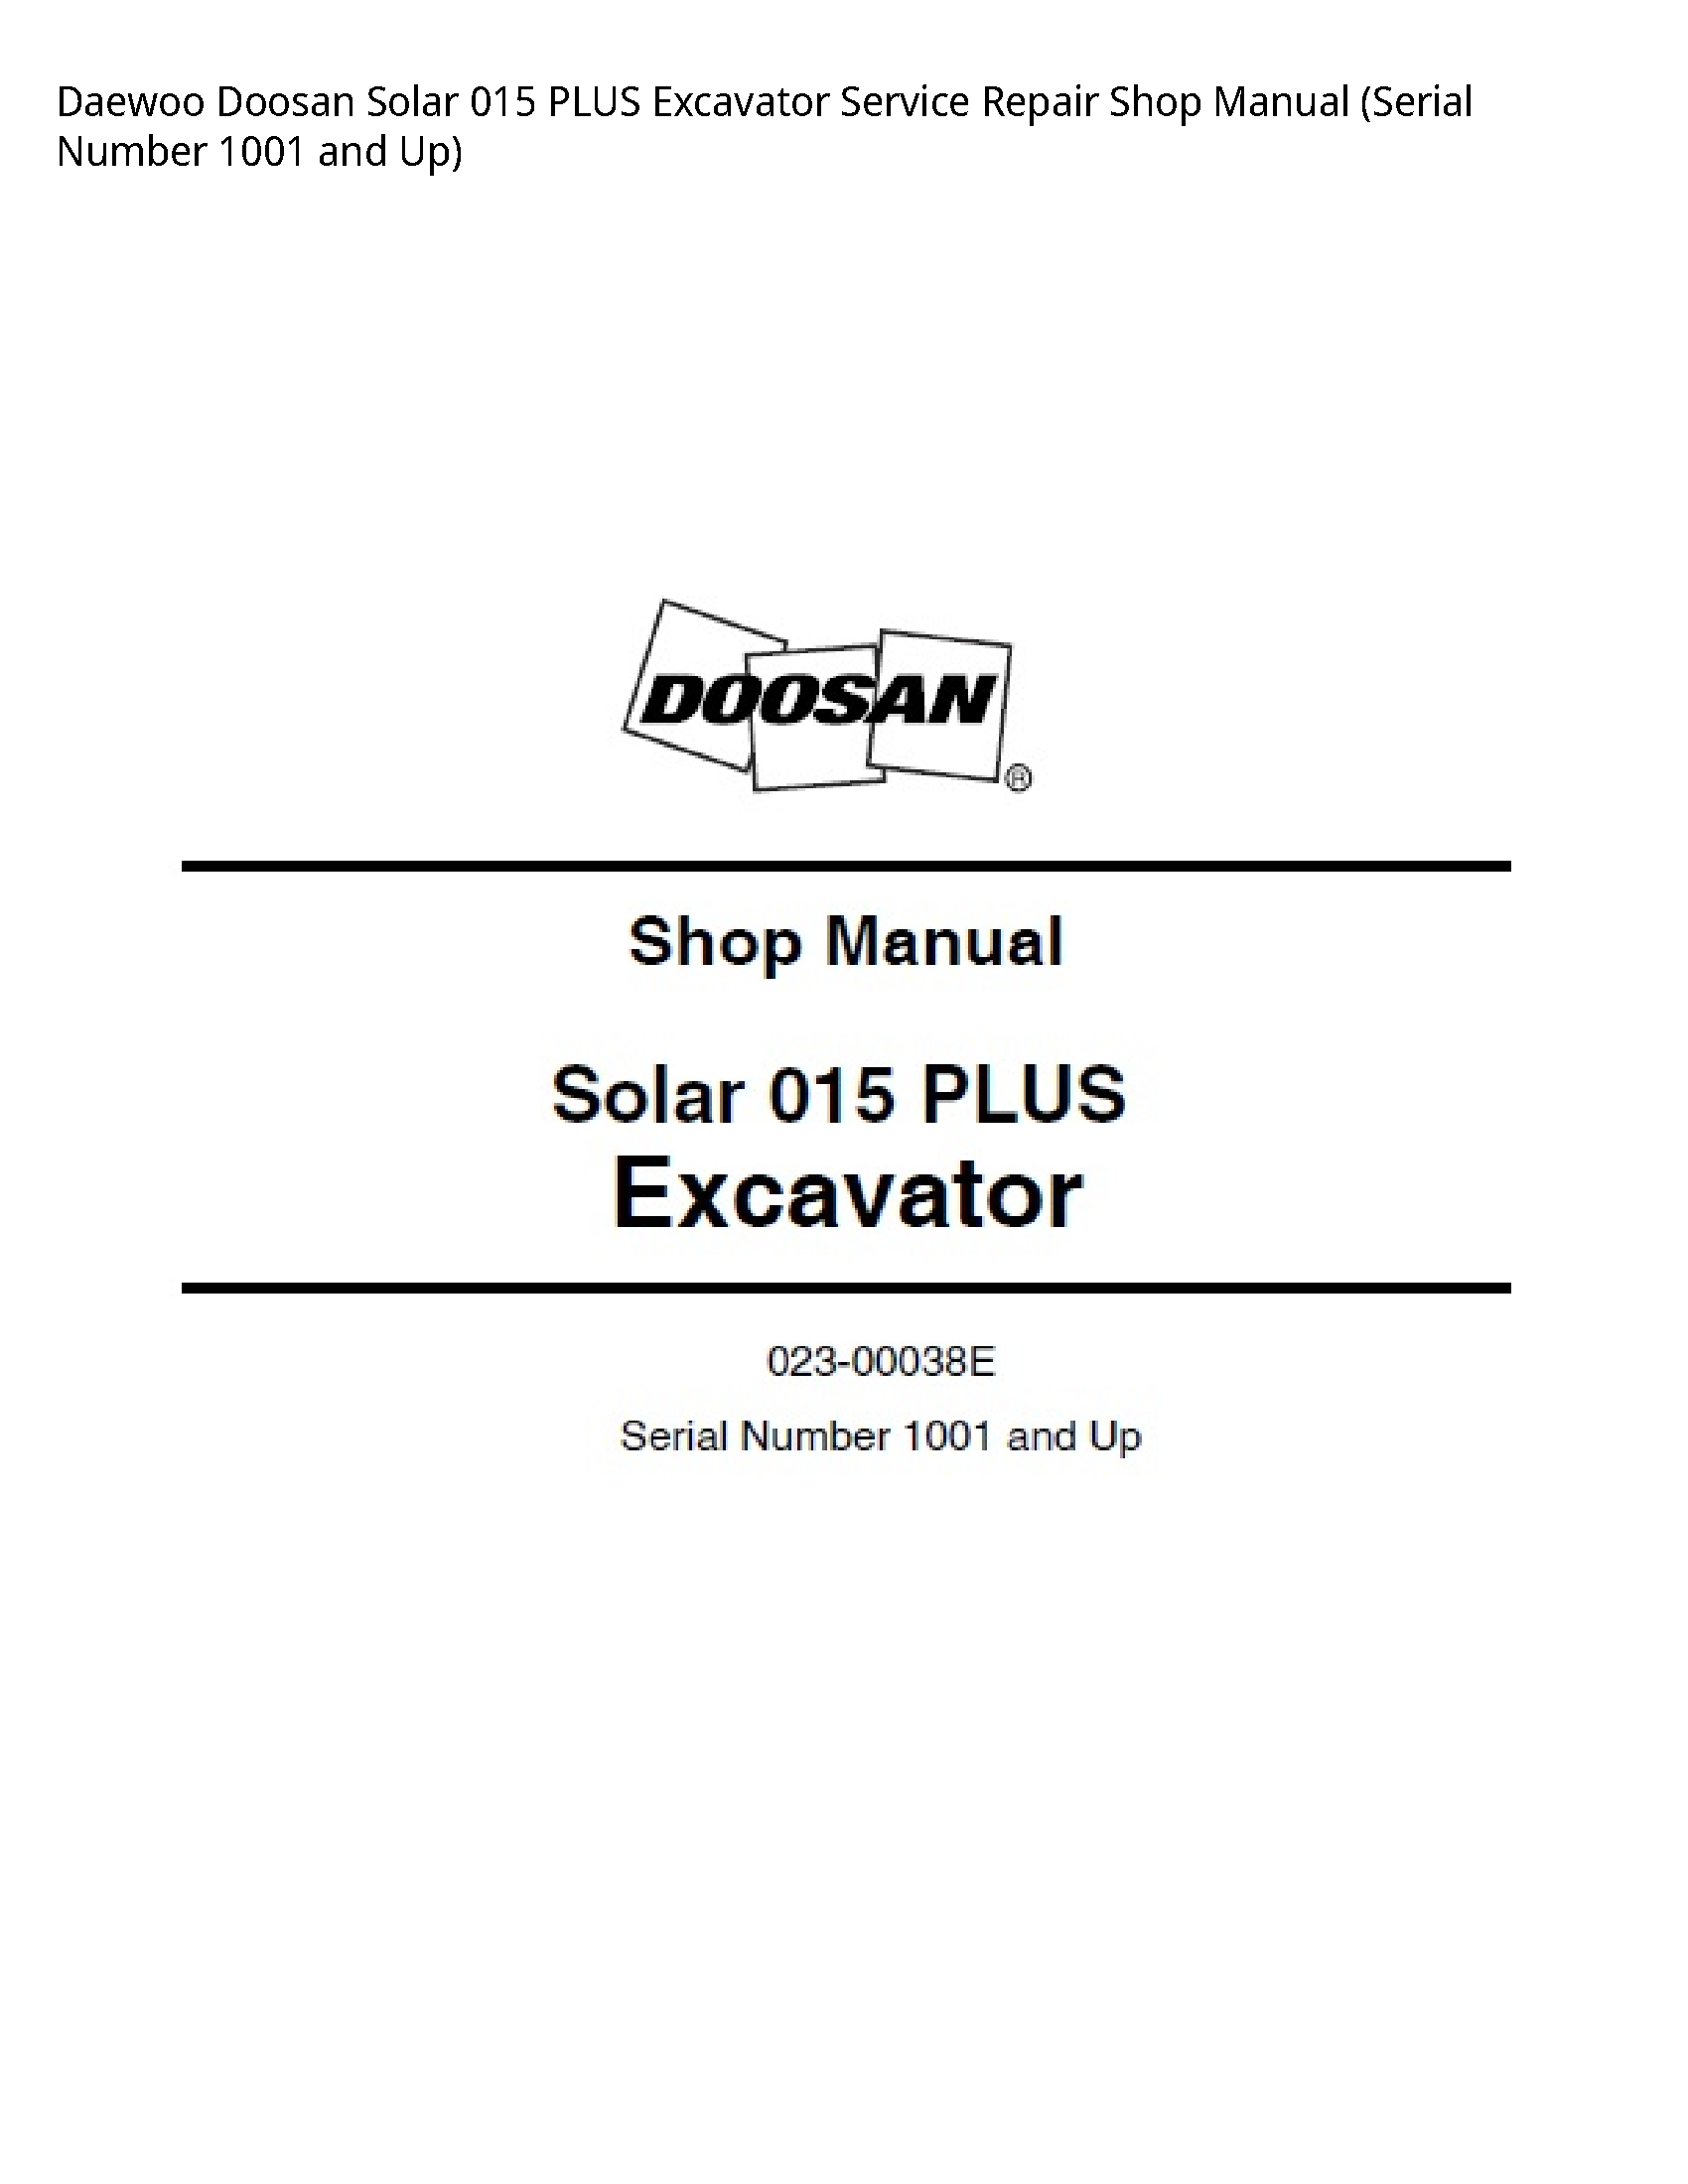 Daewoo Doosan 015 Solar PLUS Excavator manual